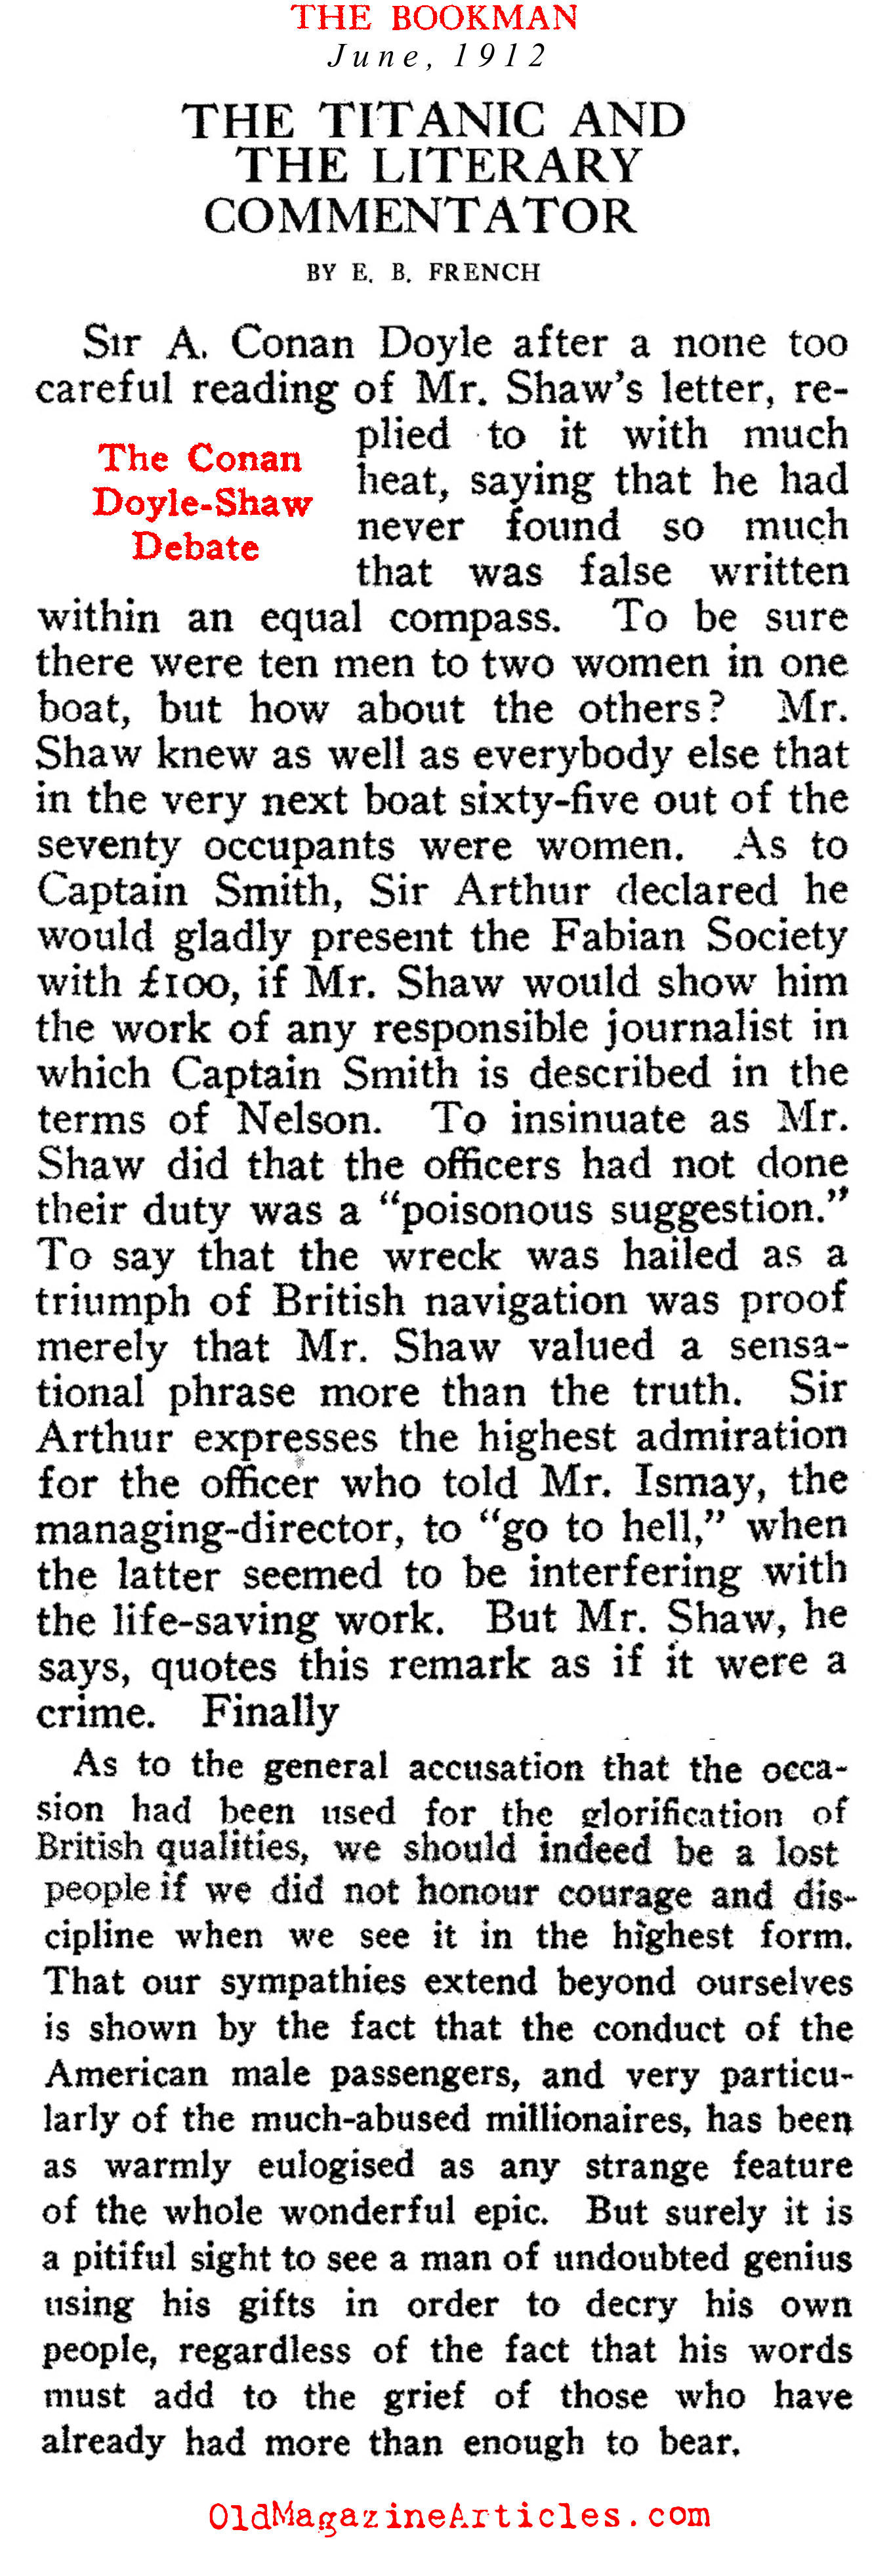 Sir Arthur Conan Doyle Debated G.B. Shaw  (The Bookman, 1912)